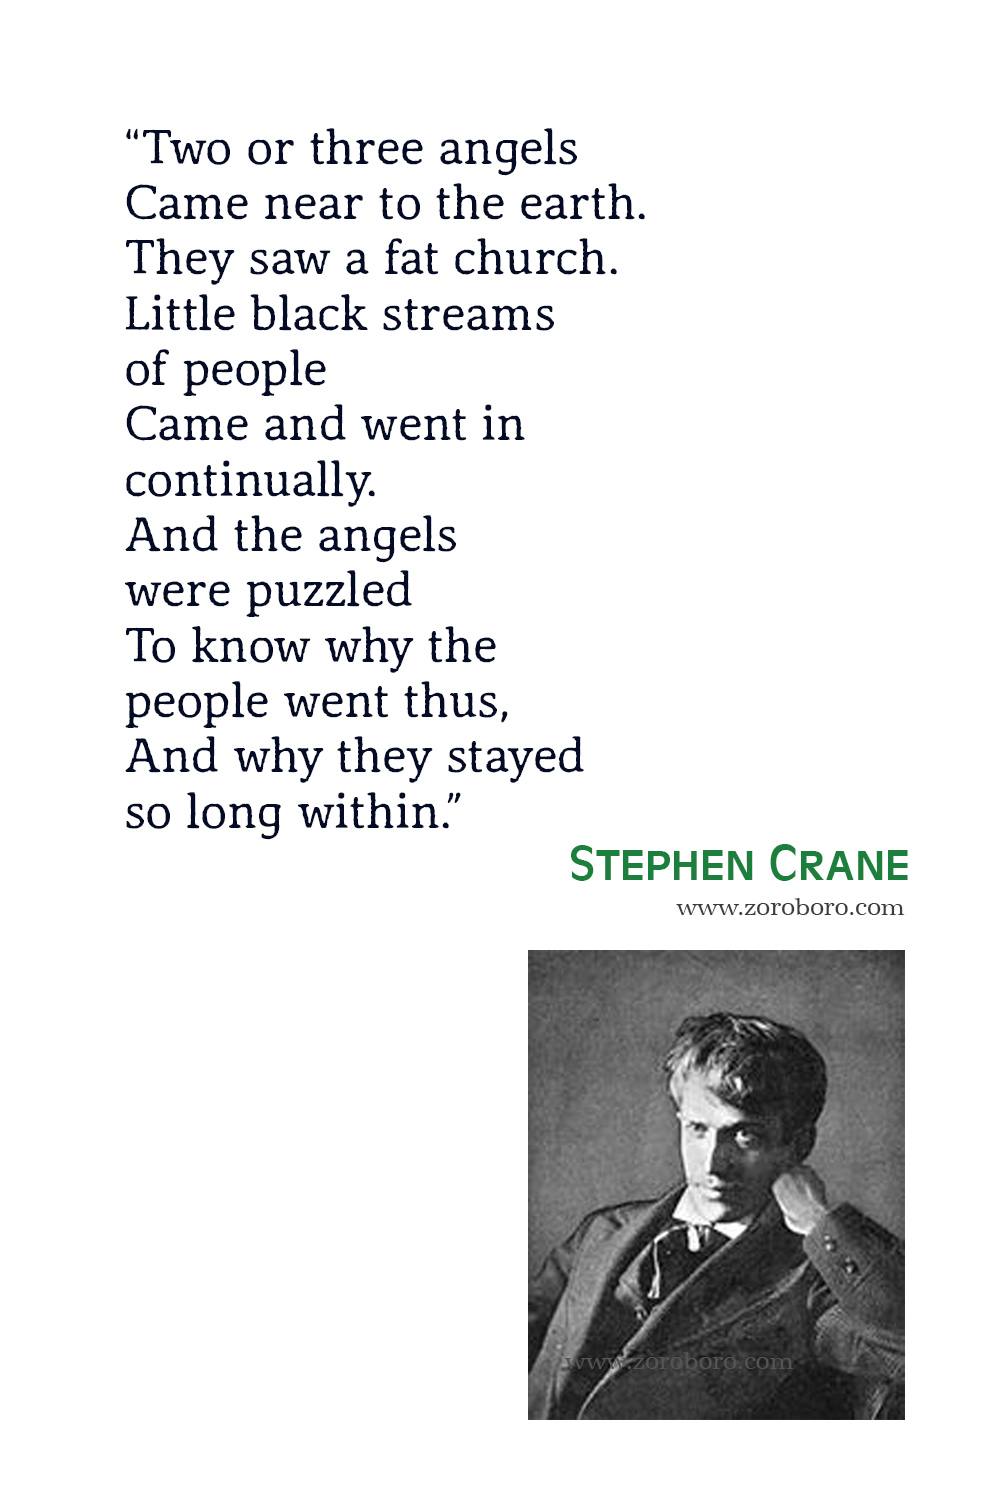 Stephen Crane Quotes, Stephen Crane Poems, Stephen Crane The Red Badge of Courage, Short Stories - Stephen Crane, Stephen Crane Poetry.